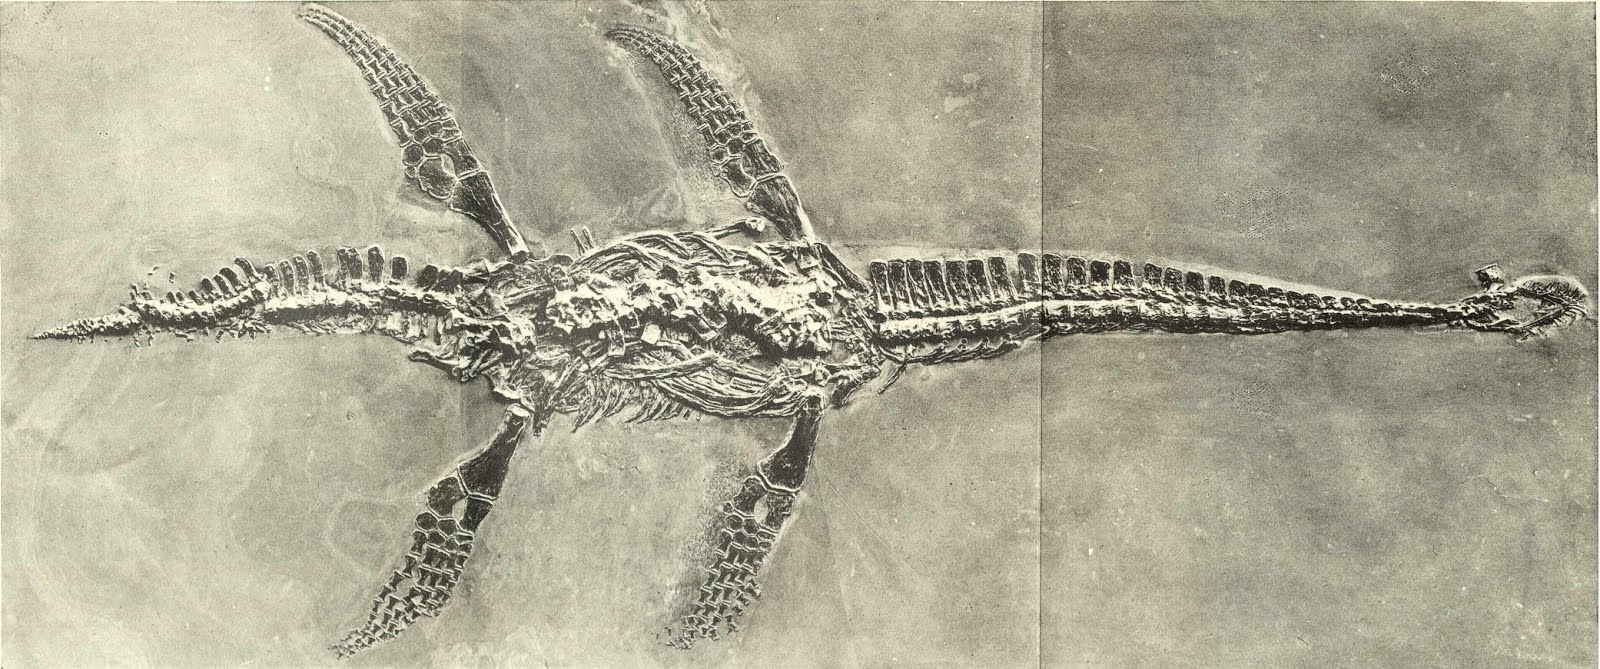 Плезиозавр видео. Кости плезиозавра. Плезиозавр окаменелость. Плезиозавр скелет. Скелет плезиозавра Палеонтологический музей.